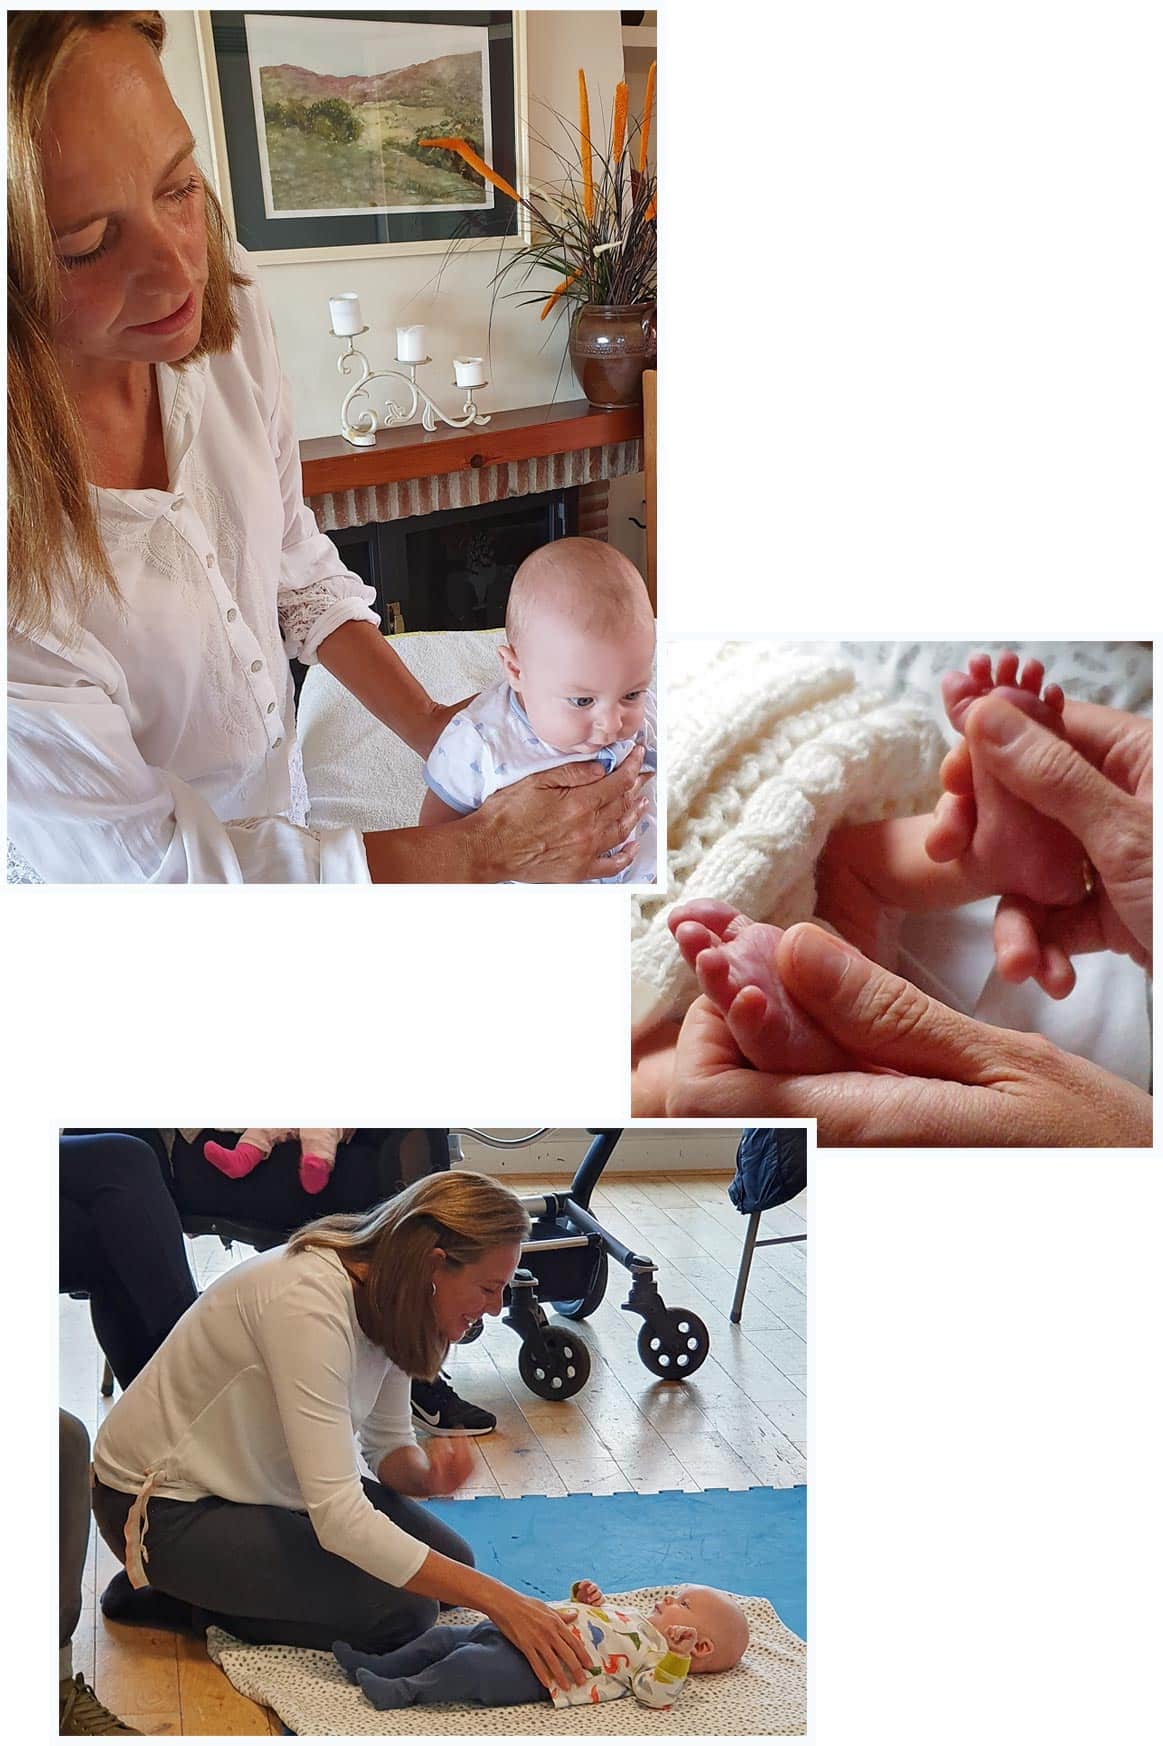 Belén working with babies